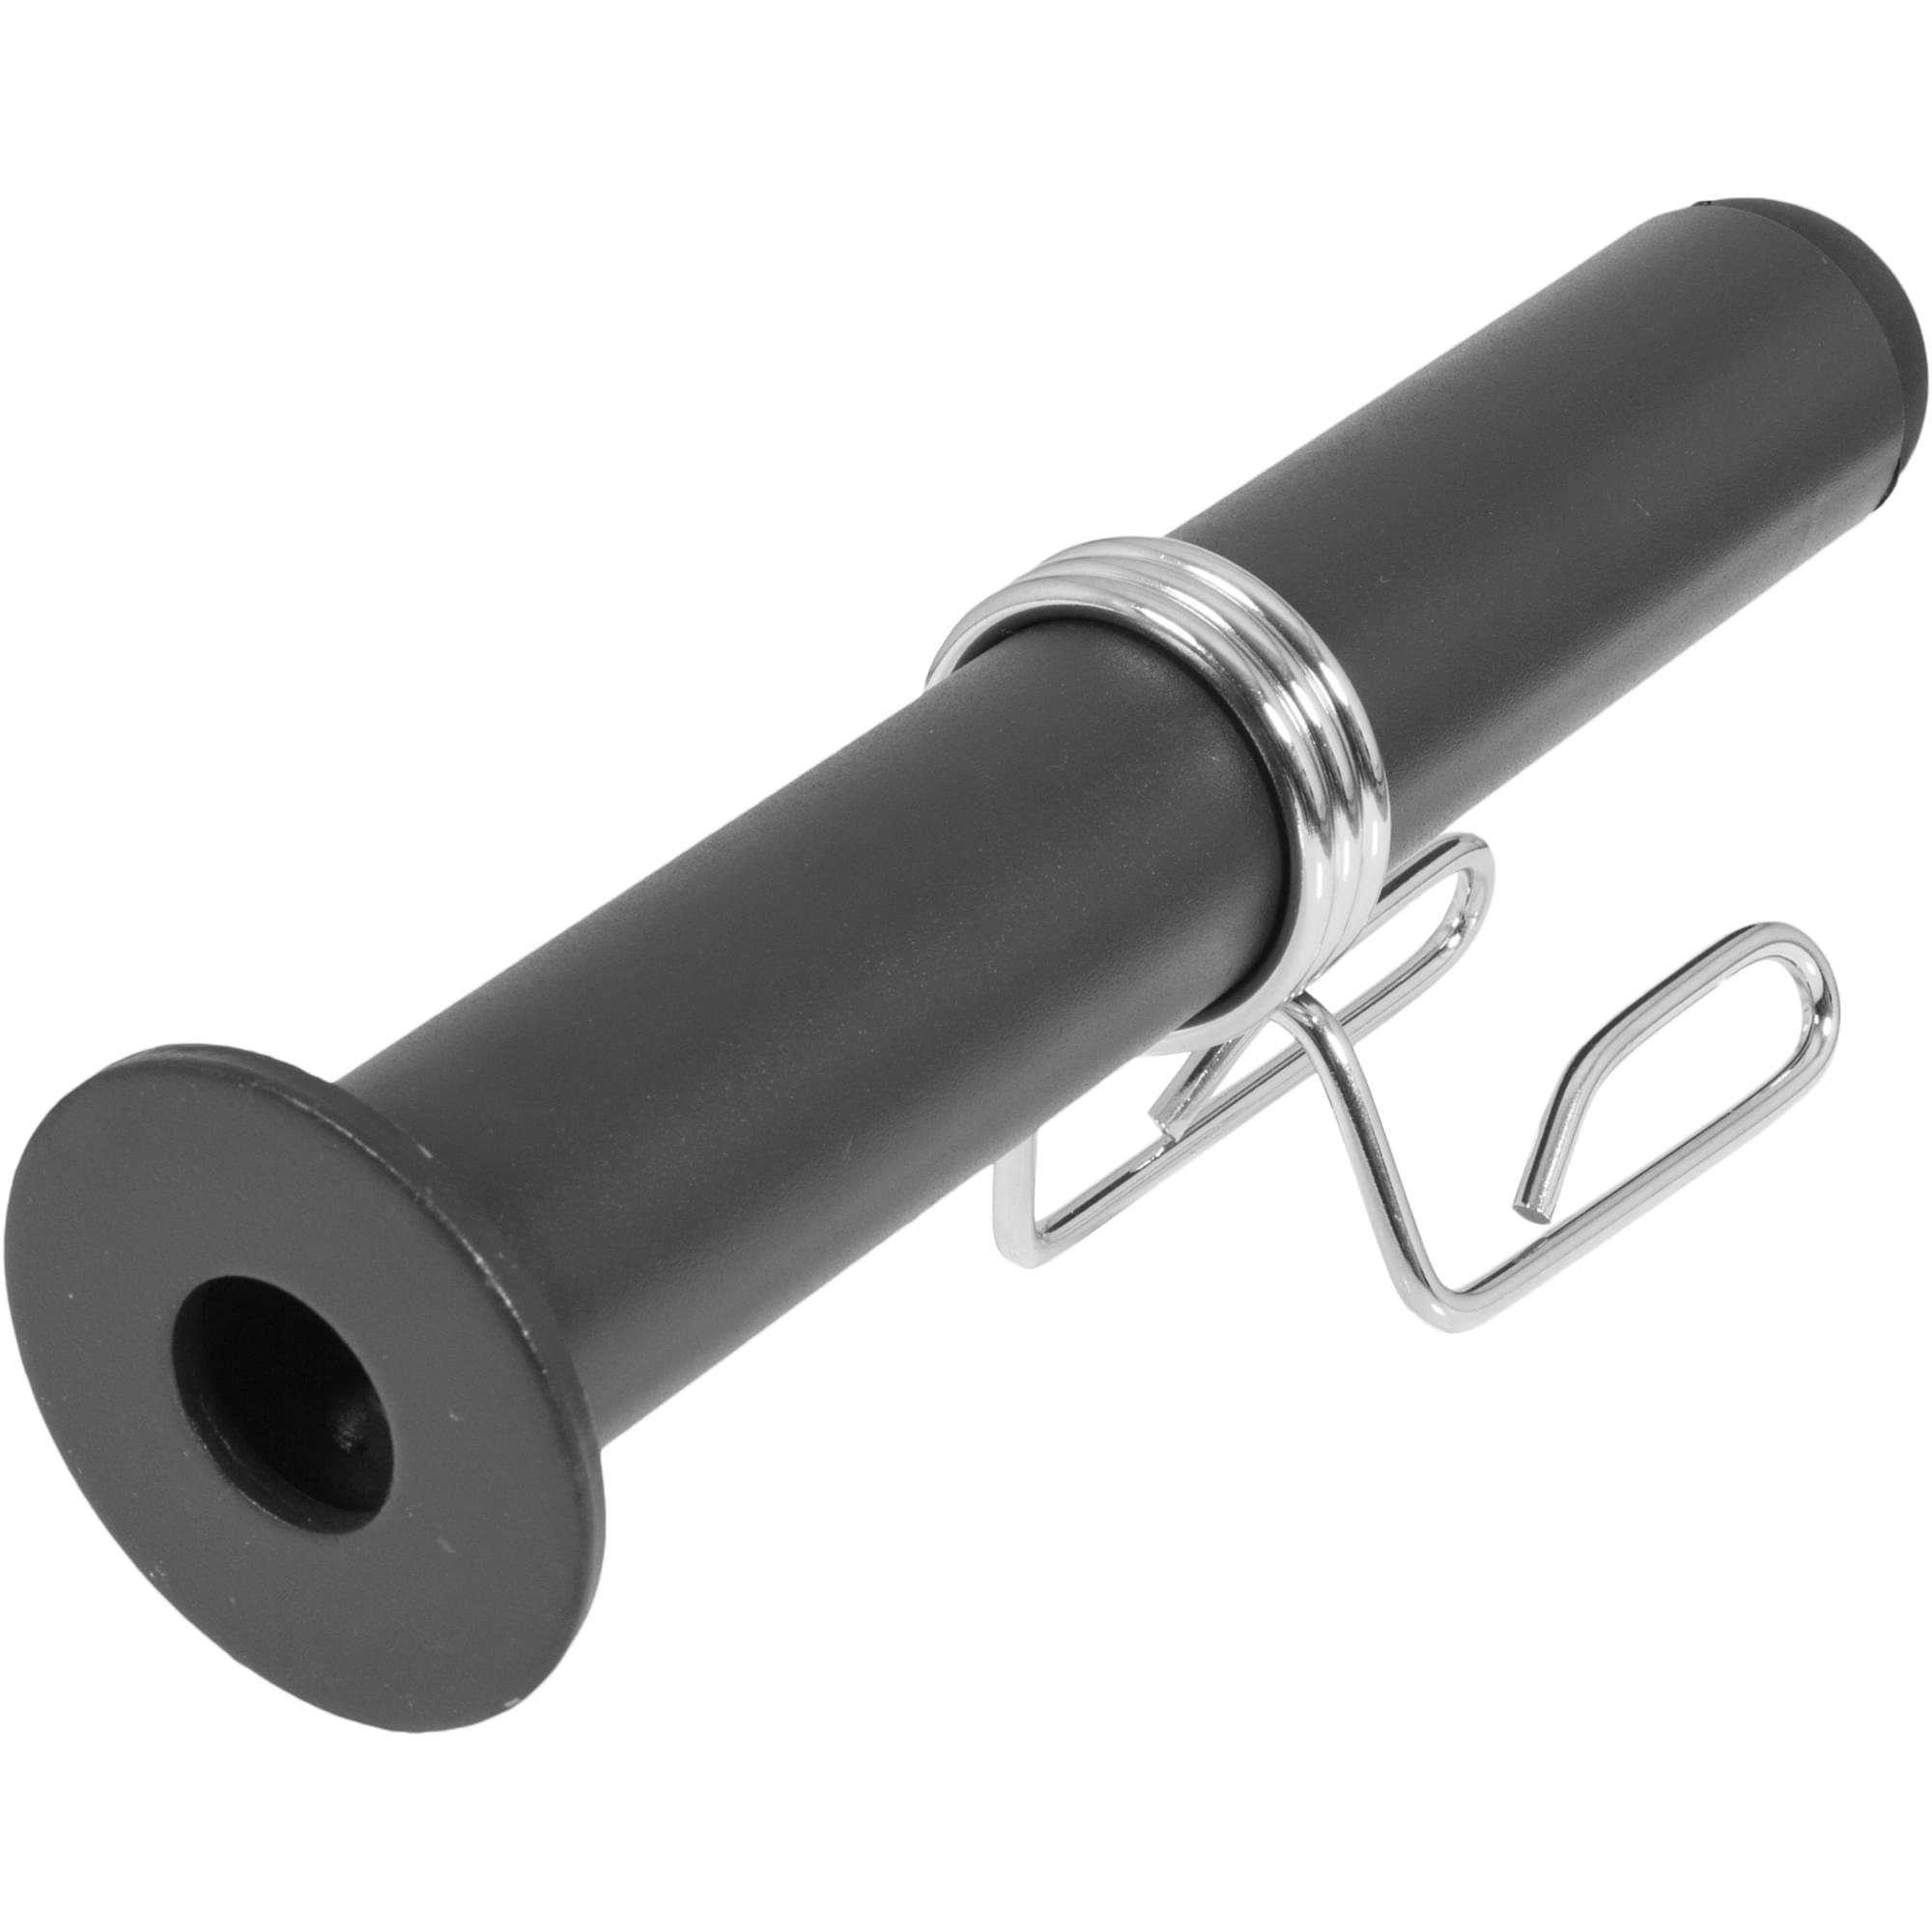 (1-tlg) für -Adapter Langhantelstange SPORTS - 50mm Sleeve, Schwarz Adapter Hantelstangen Olympic GORILLA 30mm,